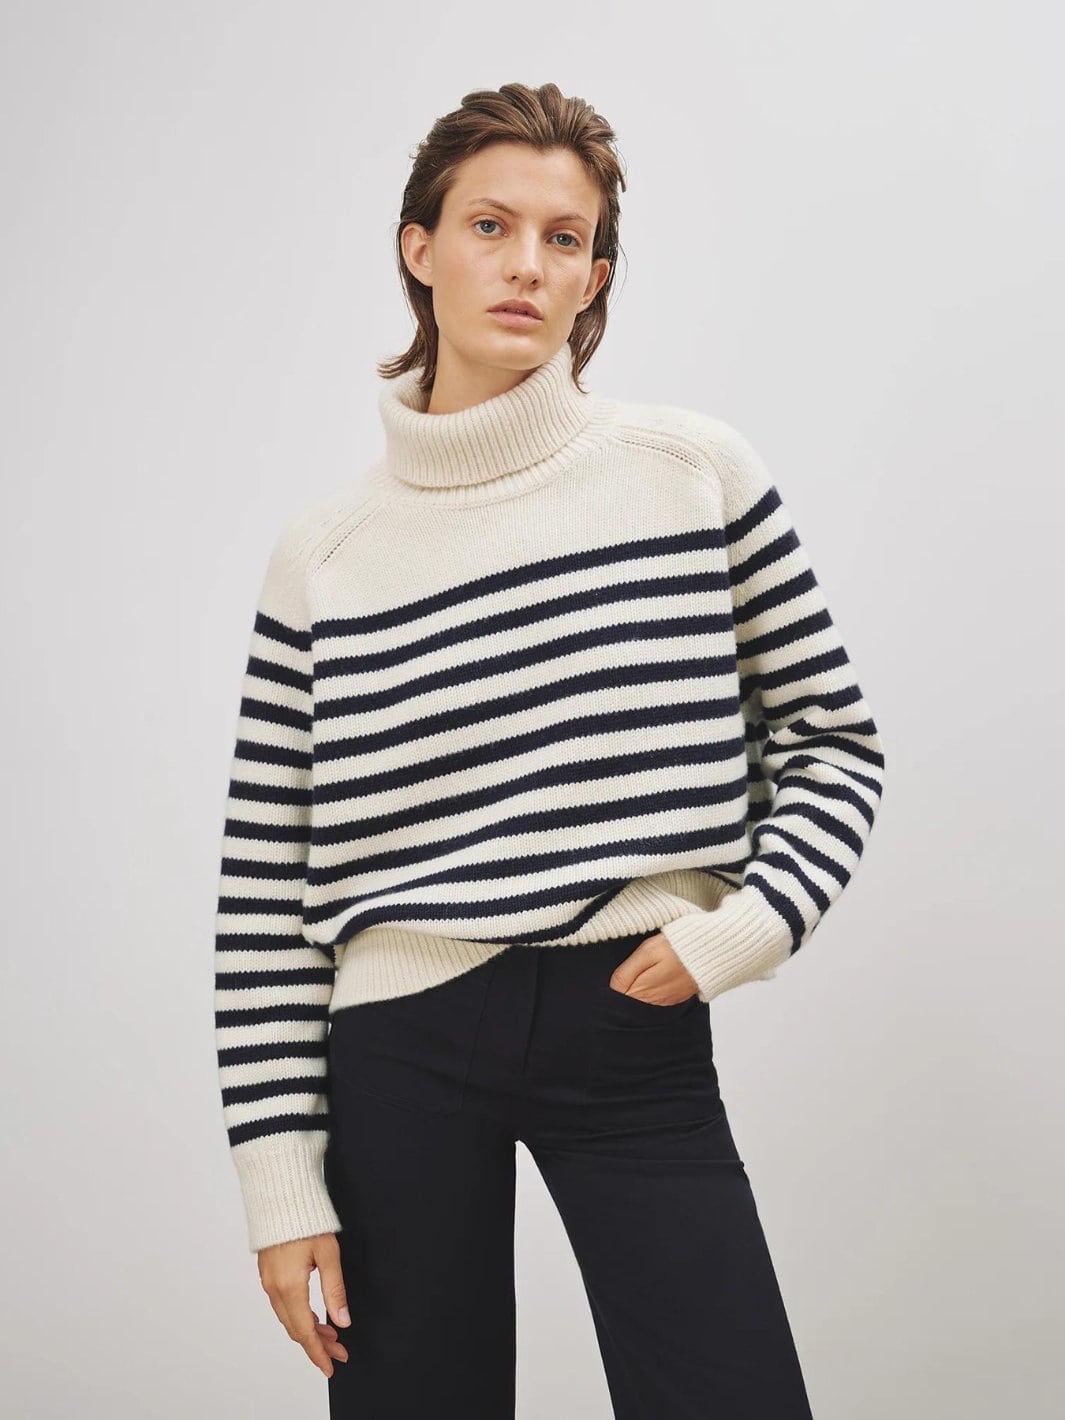 Nili Lotan Sweaters Genser | Gideon Sweater Dark Navy Stripe